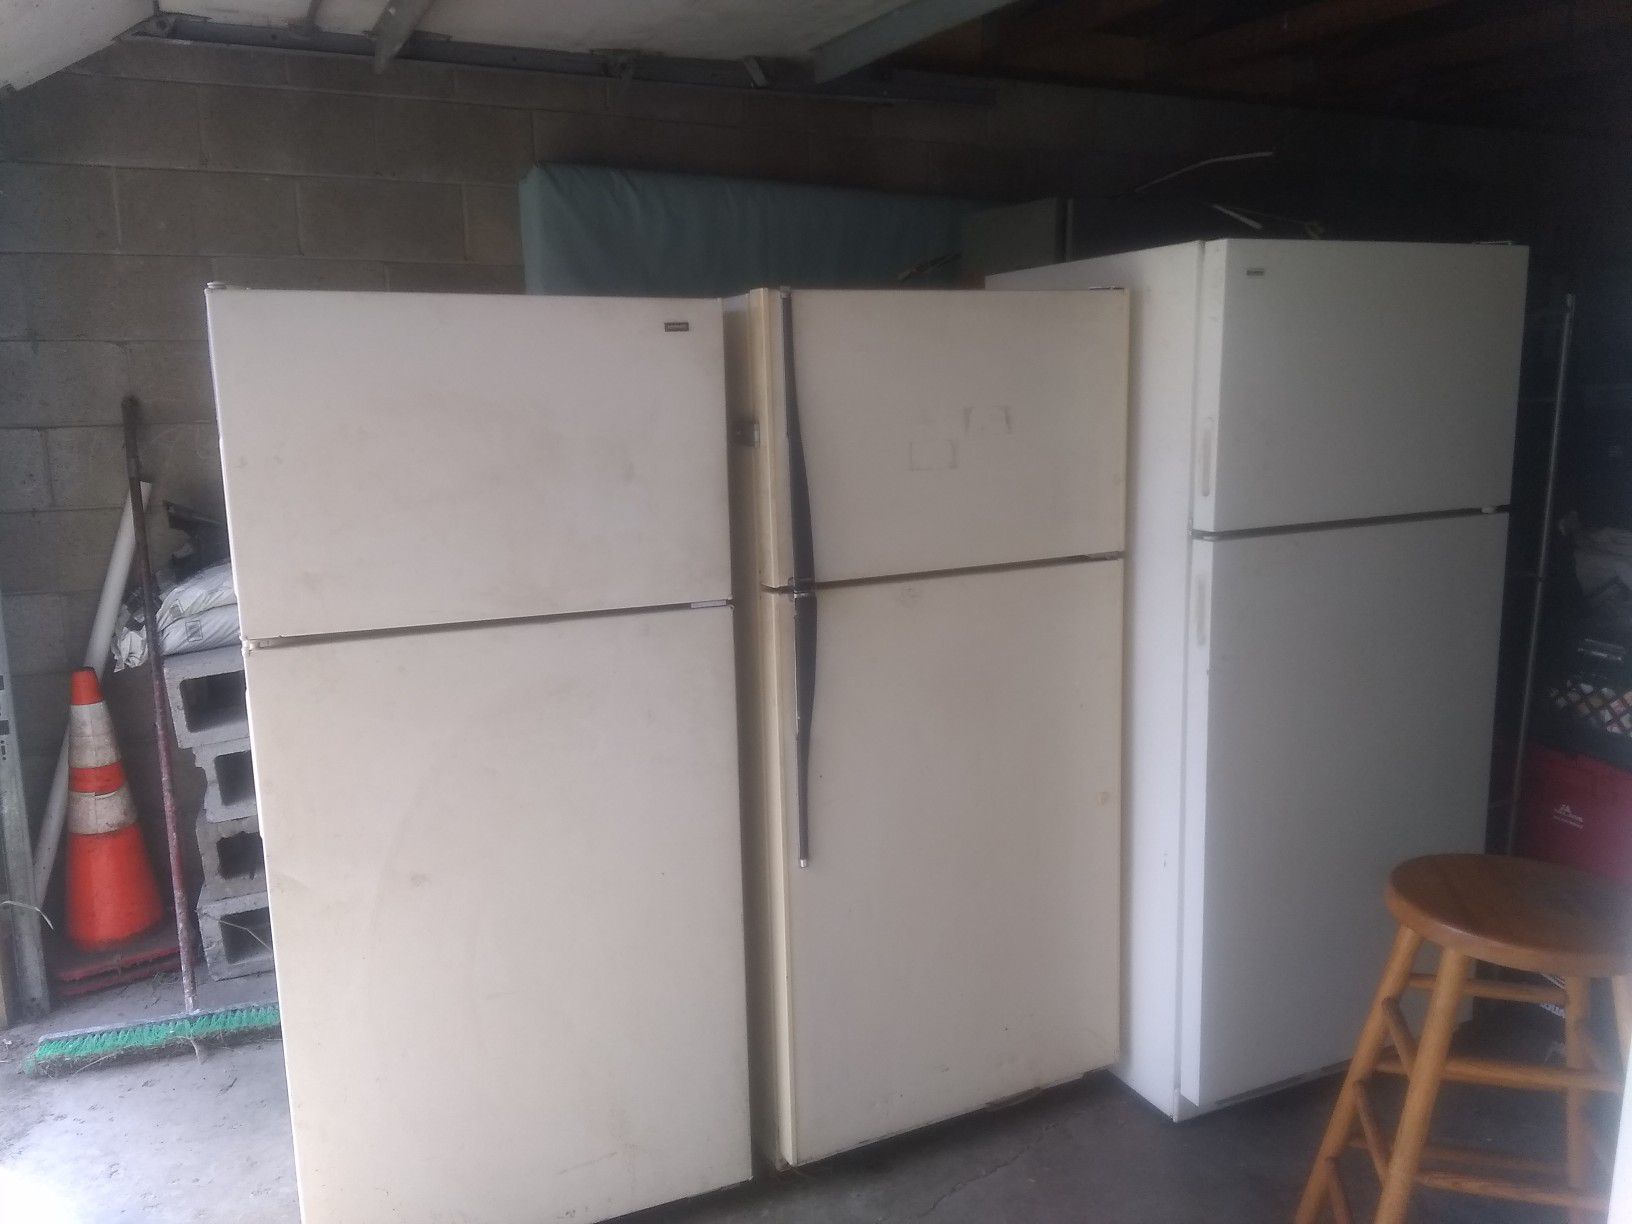 4 refrigerators